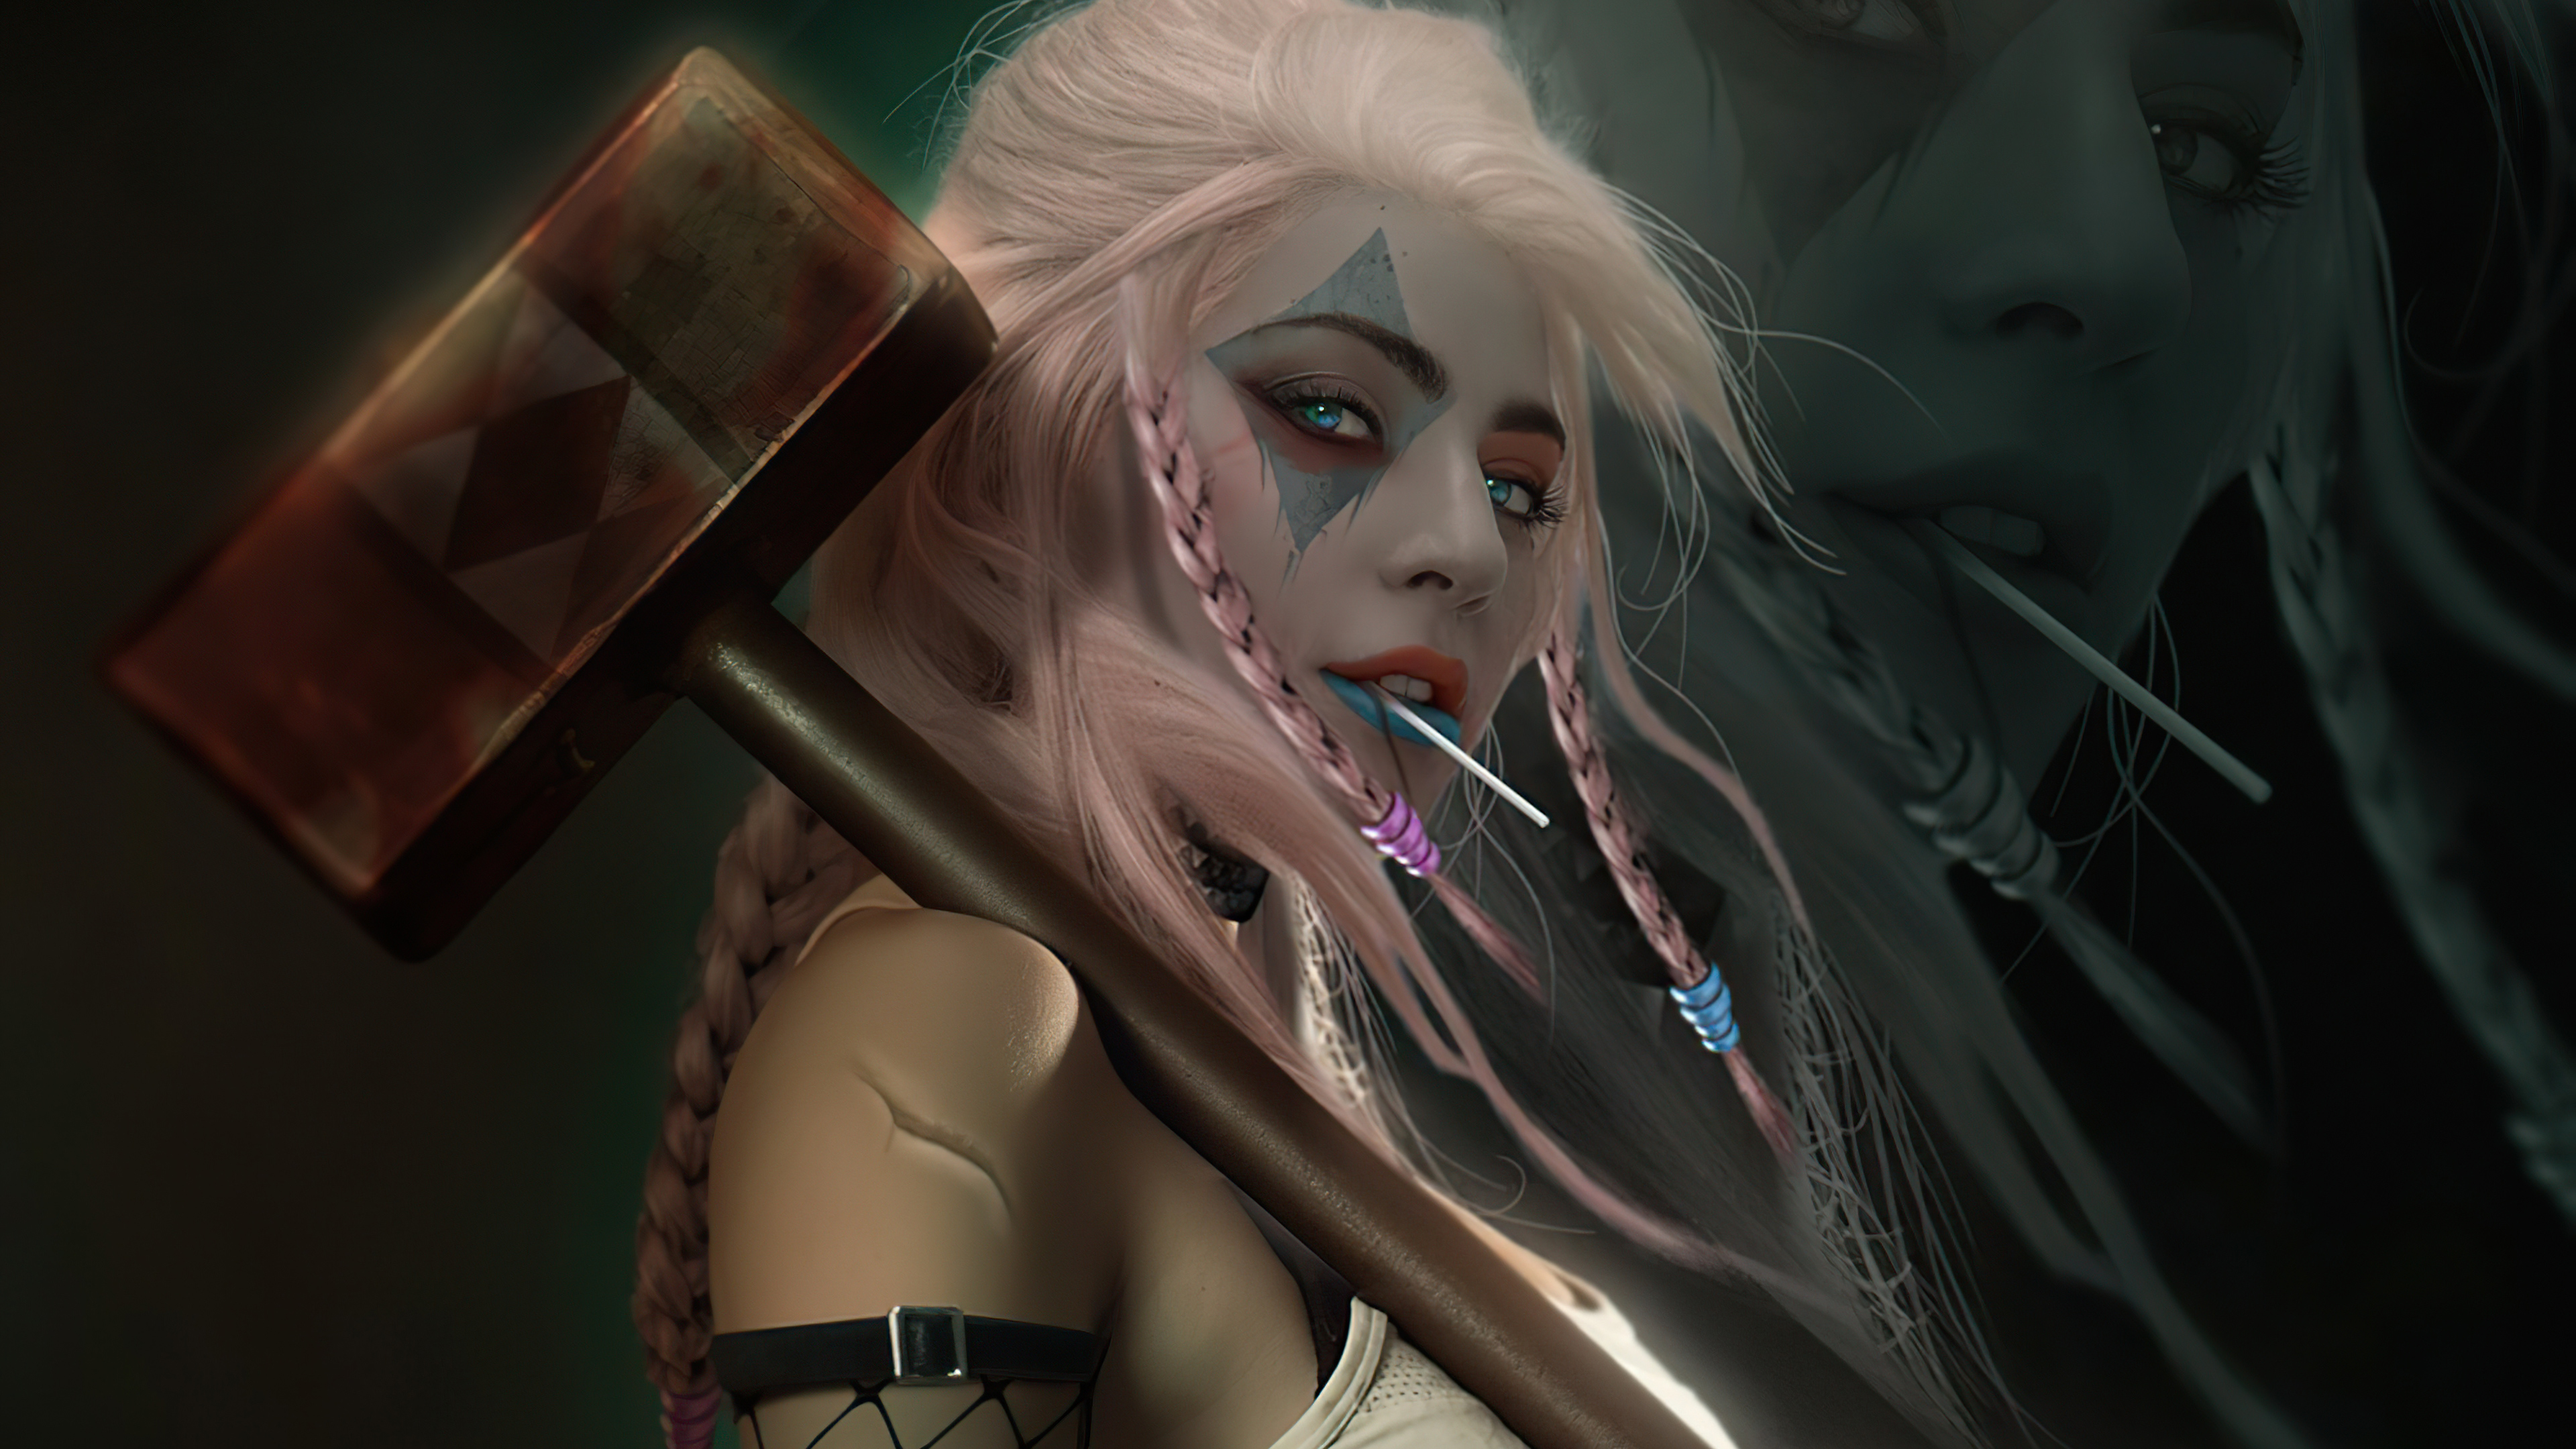 General 3840x2160 Harley Quinn weapon hammer braids makeup looking at viewer long hair simple background AI art women Lady Gaga